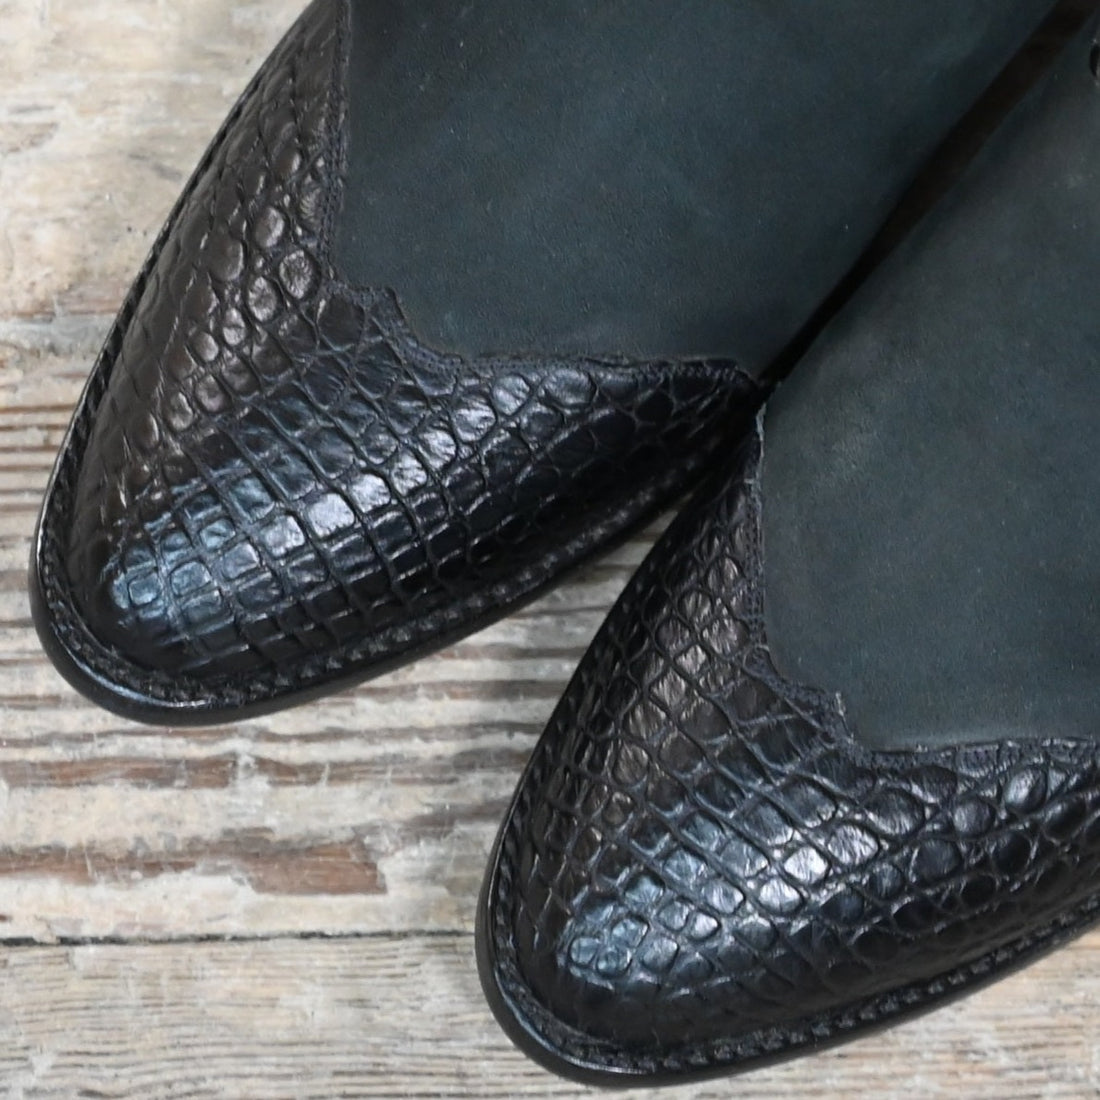 Stallion Ladies Mule (slider)in Black Nubuck Leather W/Black Alligator Trim view of toe